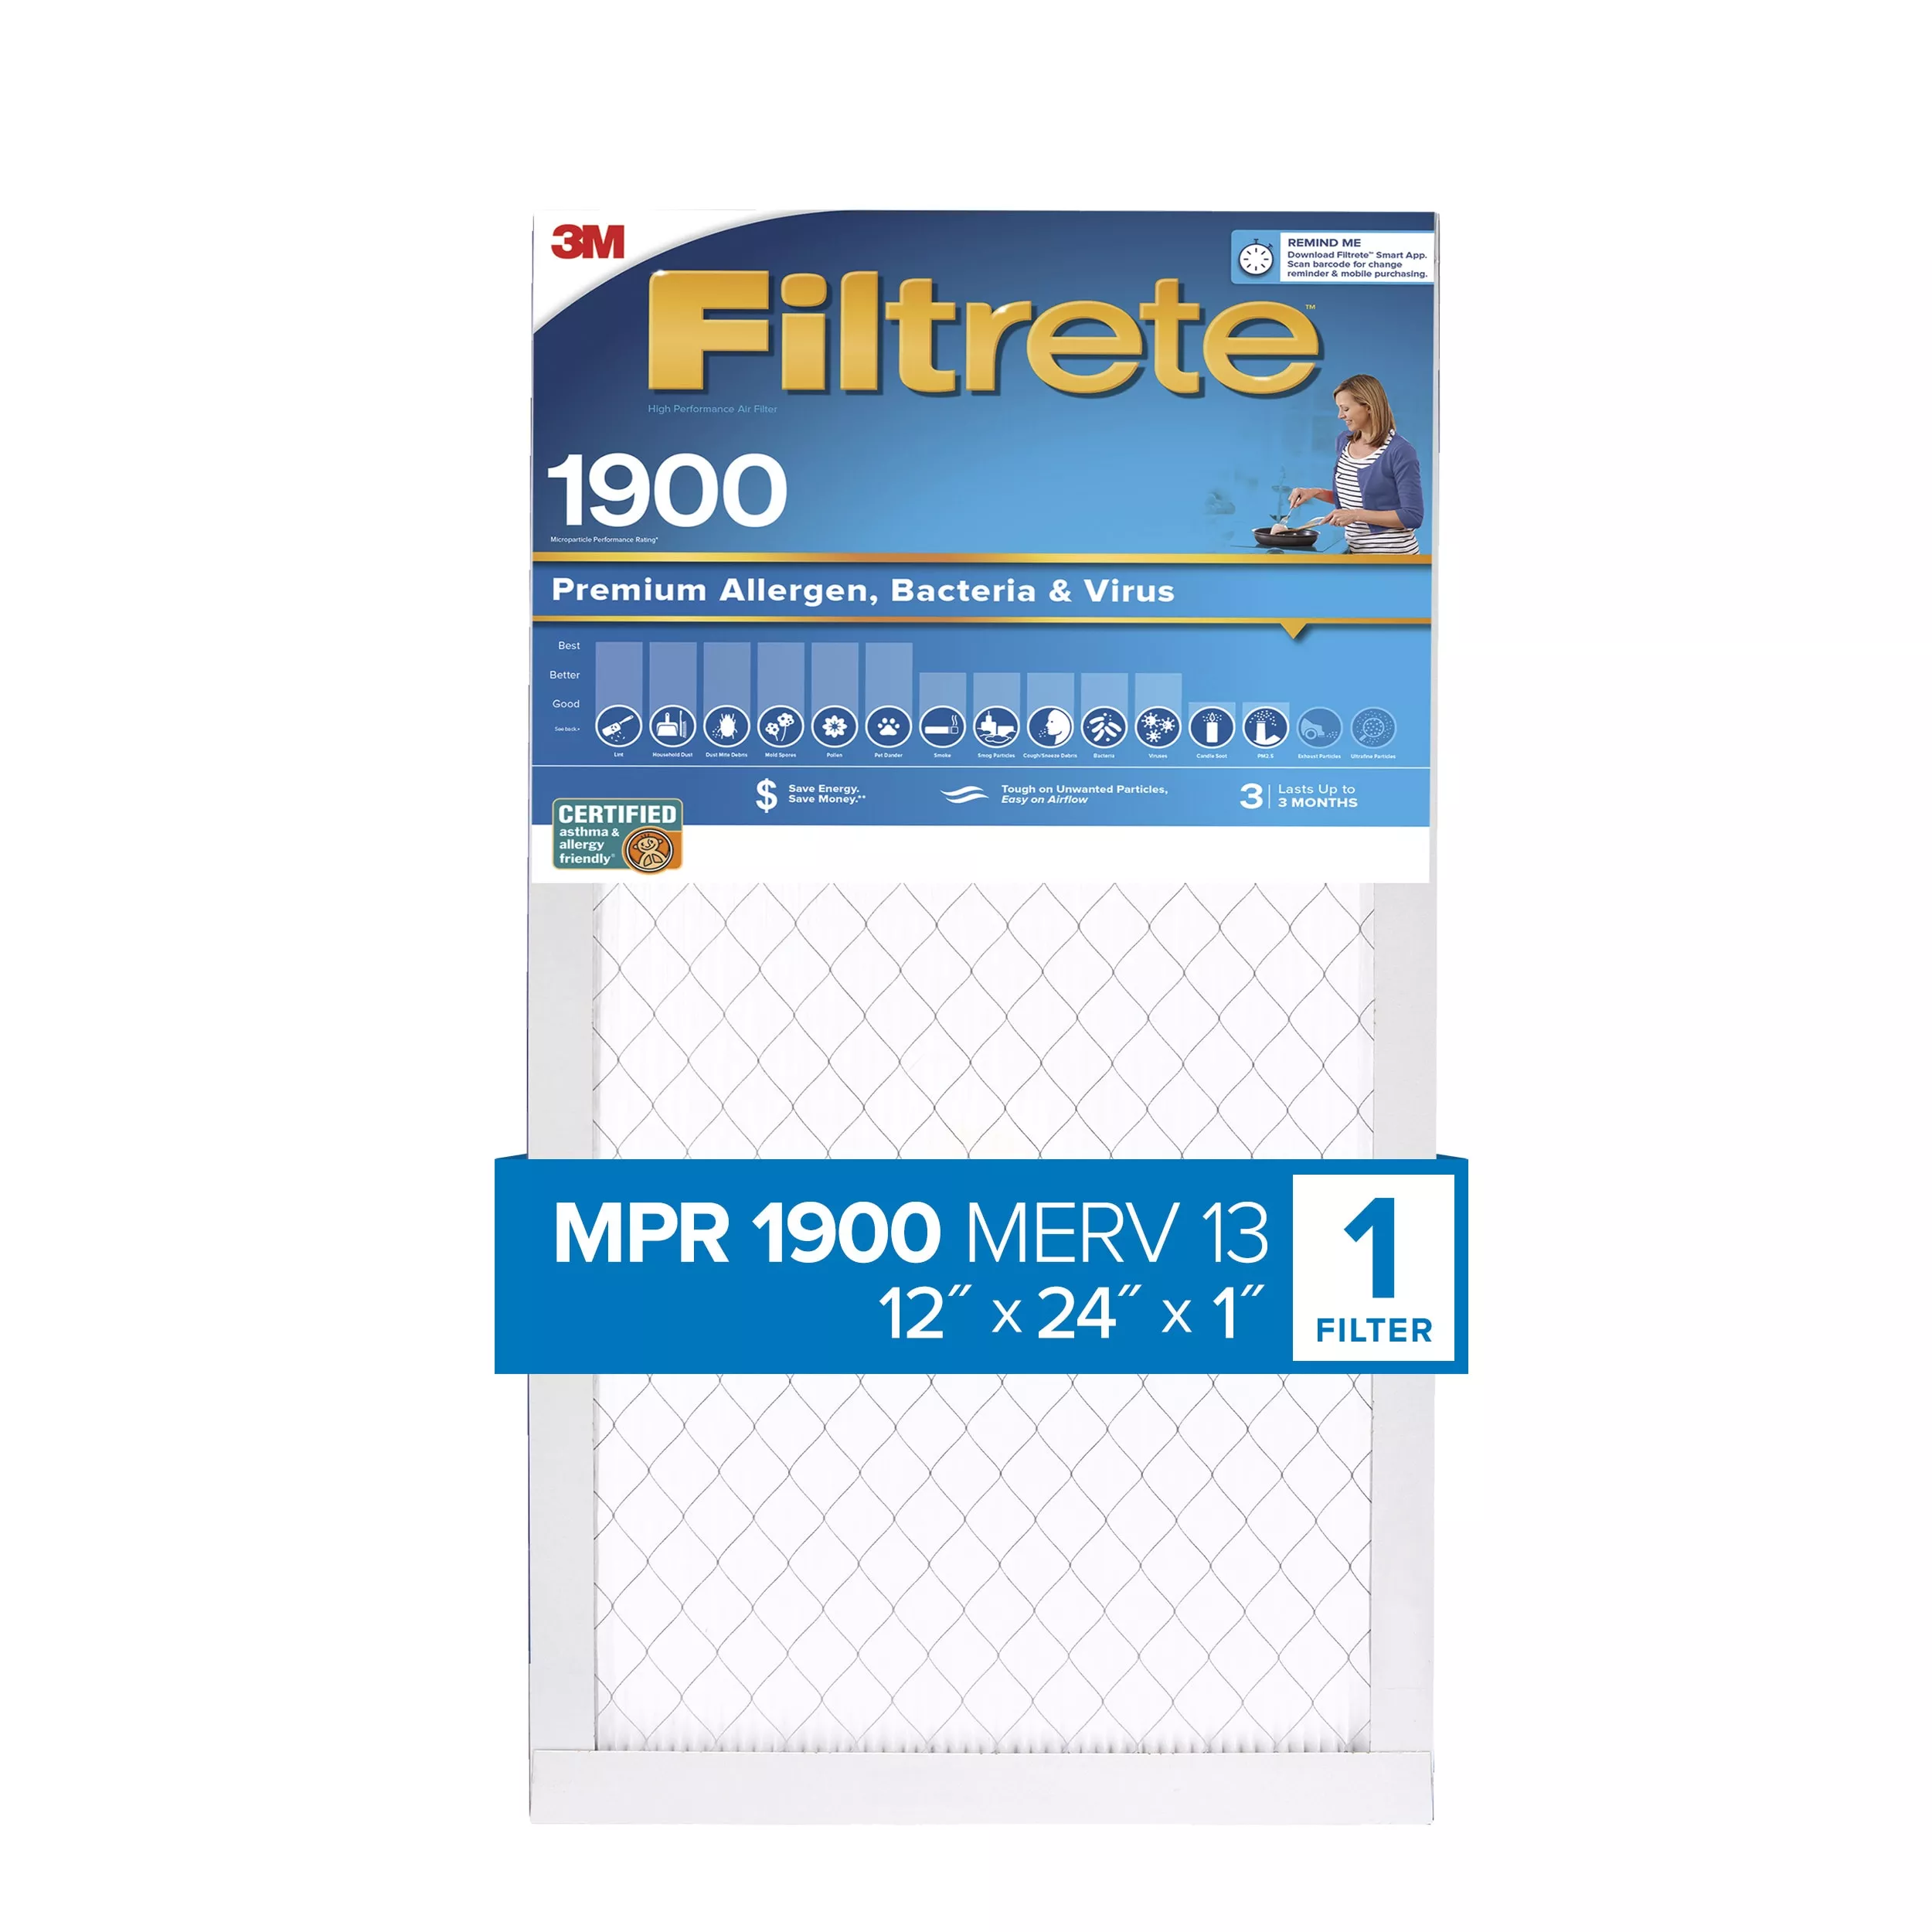 Filtrete™ High Performance Air Filter 1900 MPR UT20-4, 12 in x 24 in x 1 in (30.4 cm x 60.9 cm x 2.5 cm)